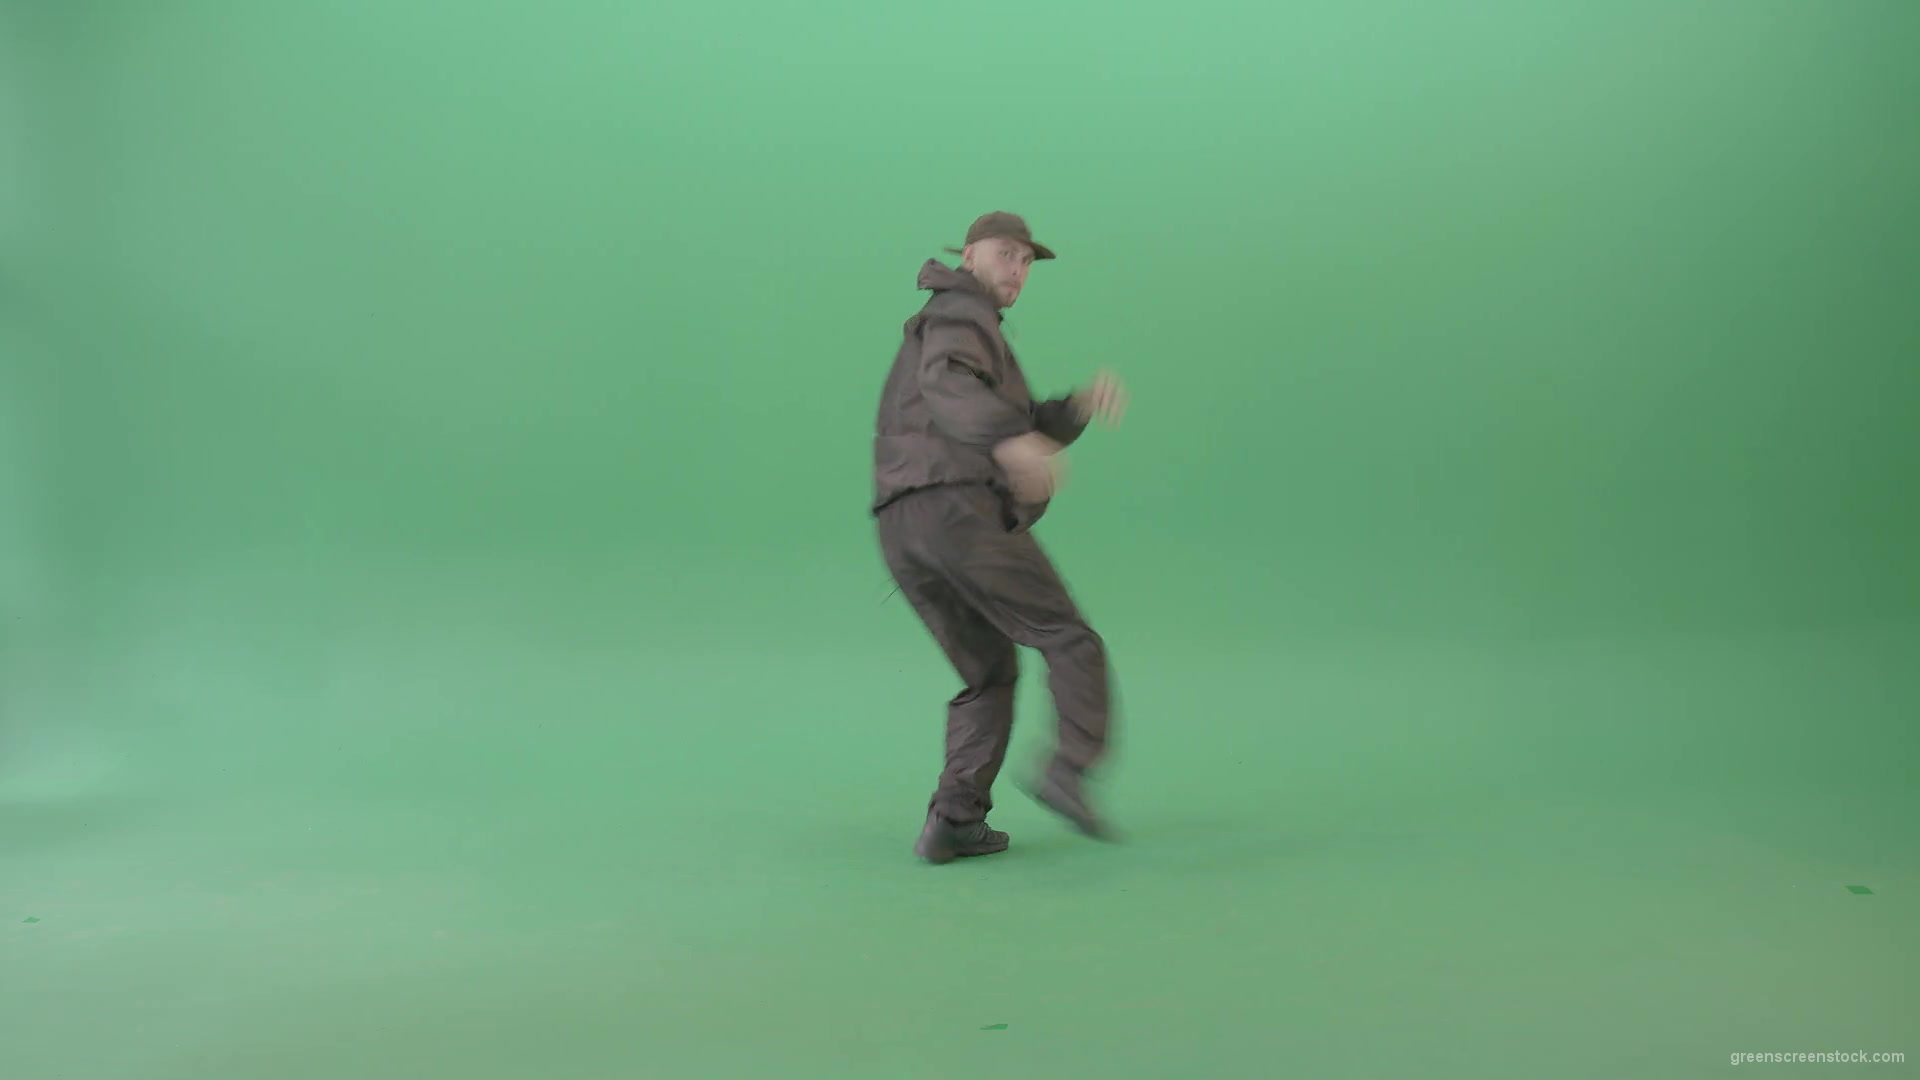 Professional-Hip-Hop-break-dancer-Stylish-man-dancing-on-green-screen-4K-Video-Footage-1920_005 Green Screen Stock